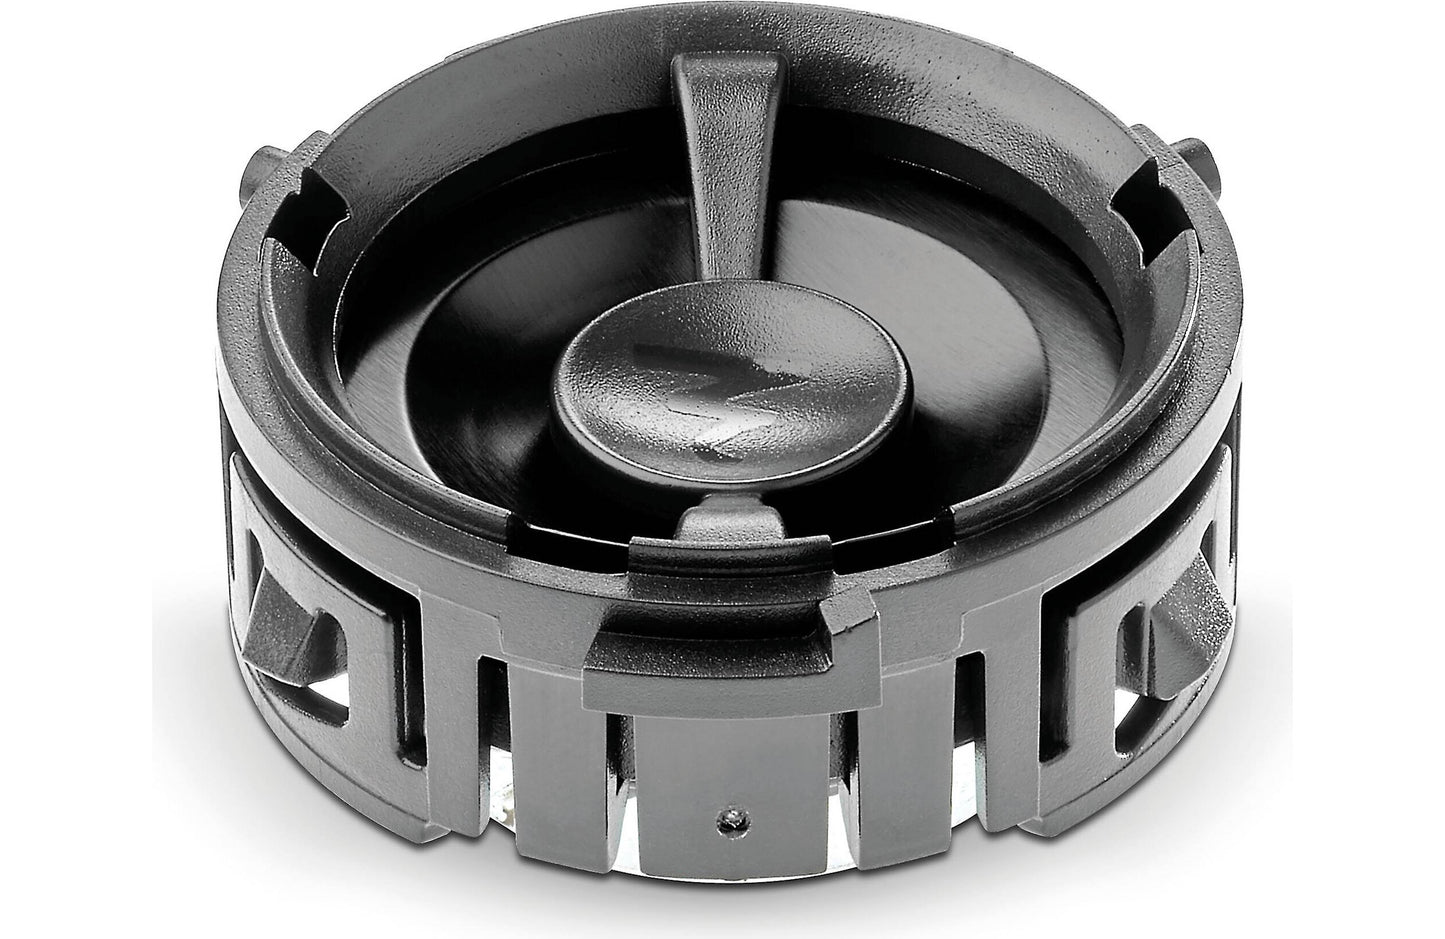 Focal Inside IS MBZ 100 4" component speaker system for select Mercedes-Benz vehicles